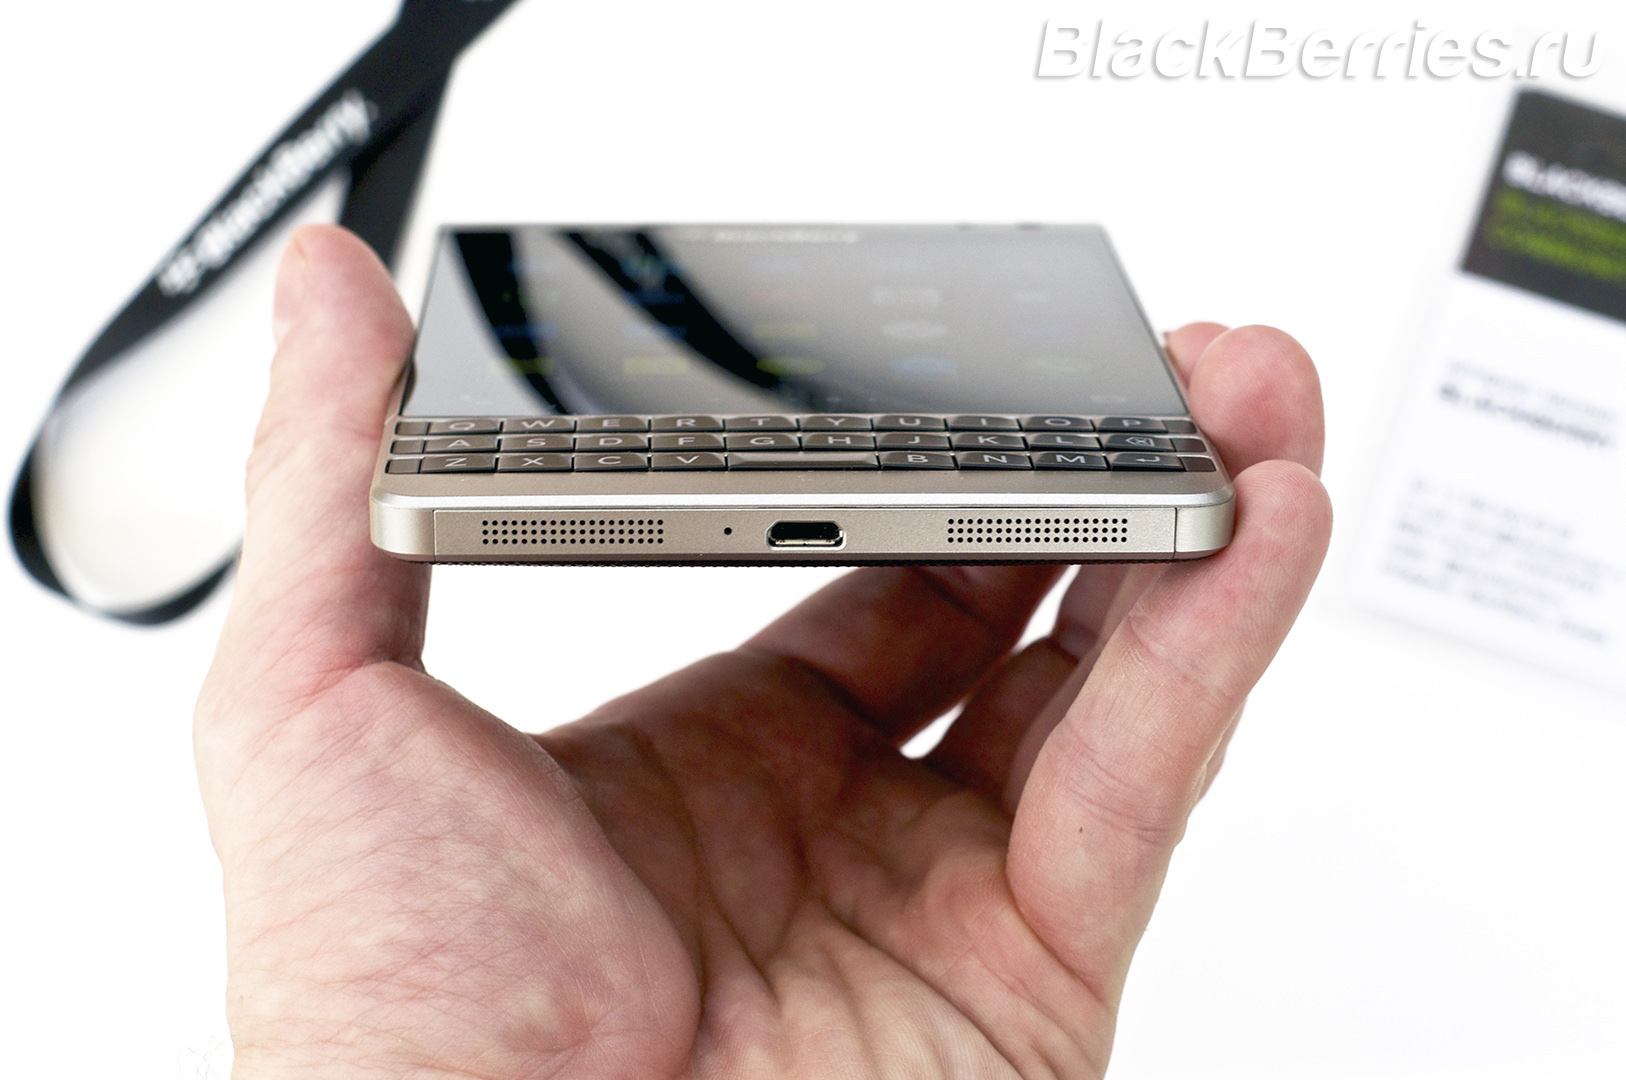 BlackBerry-Passport-Silver-Edition-Review-35